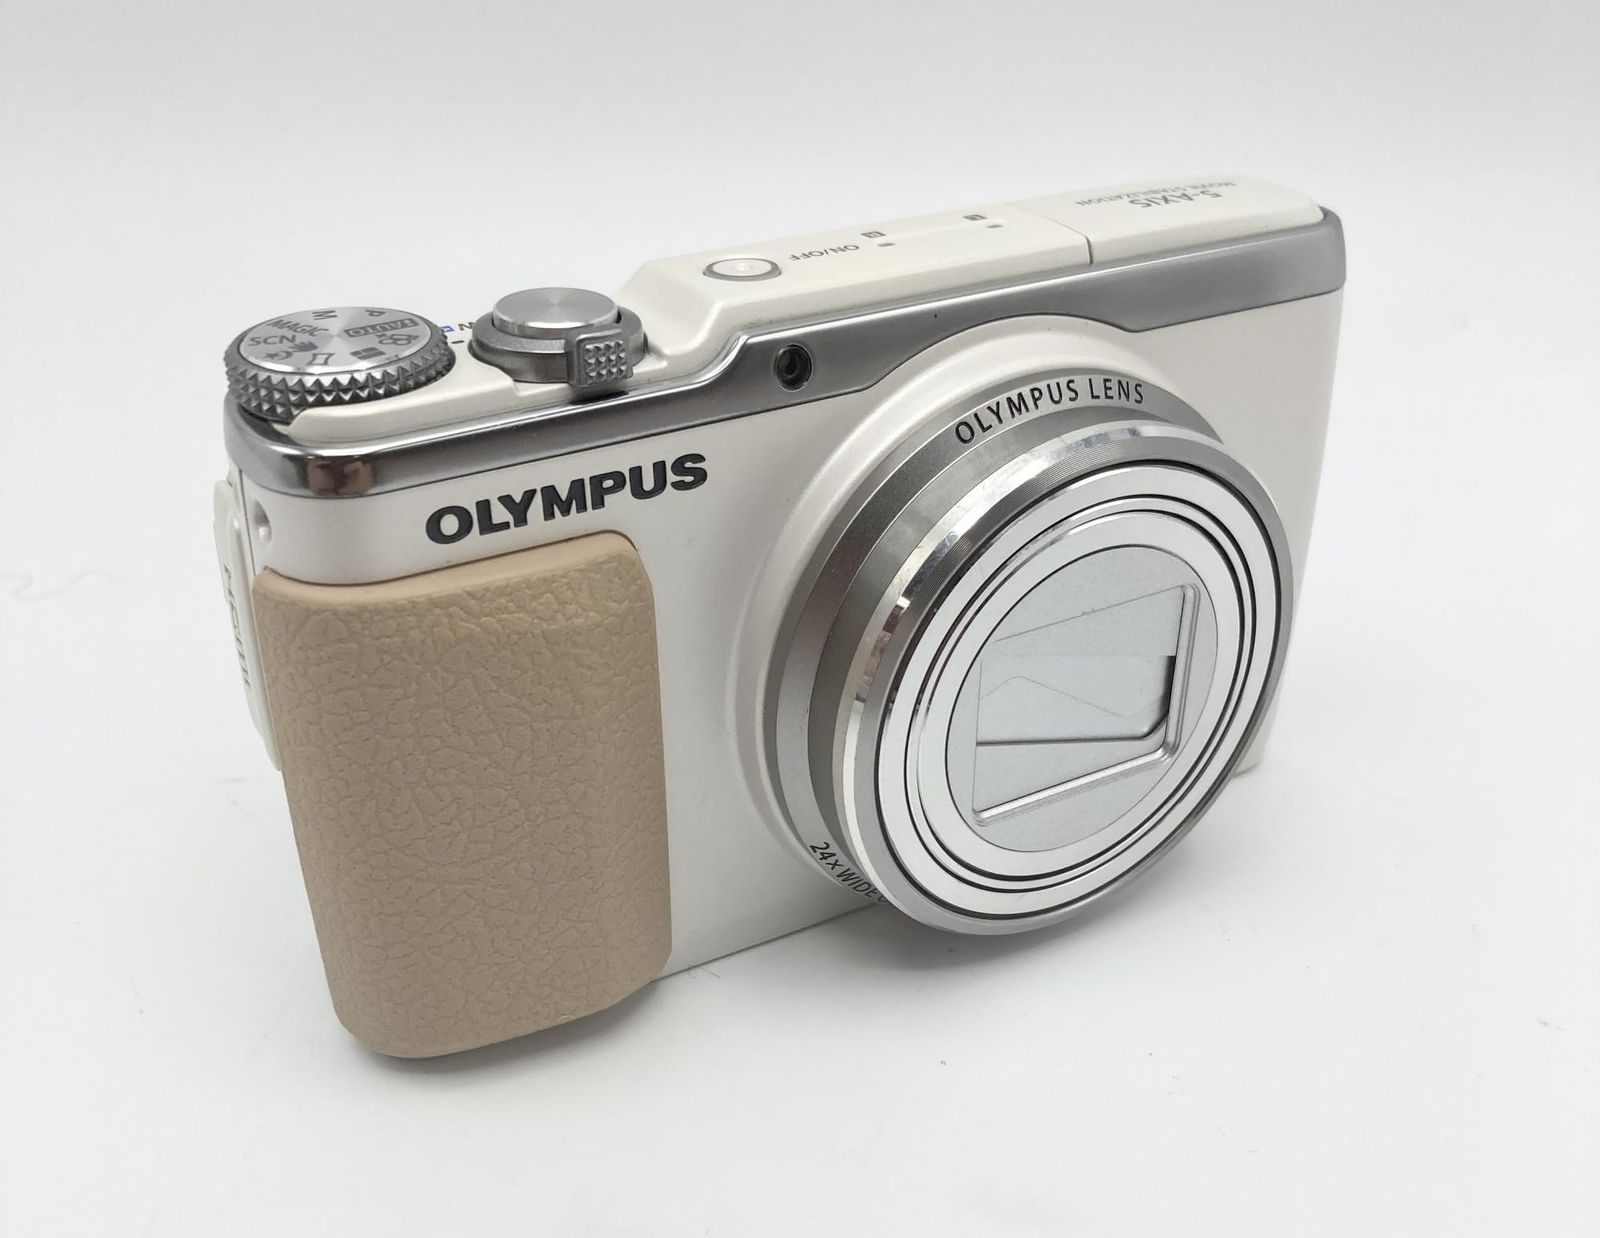 OLYMPUS デジタルカメラ STYLUS 48倍ズーム ホワイト SH-60 WHT 【公式】ゲーム・家電良品店shop123 メルカリ